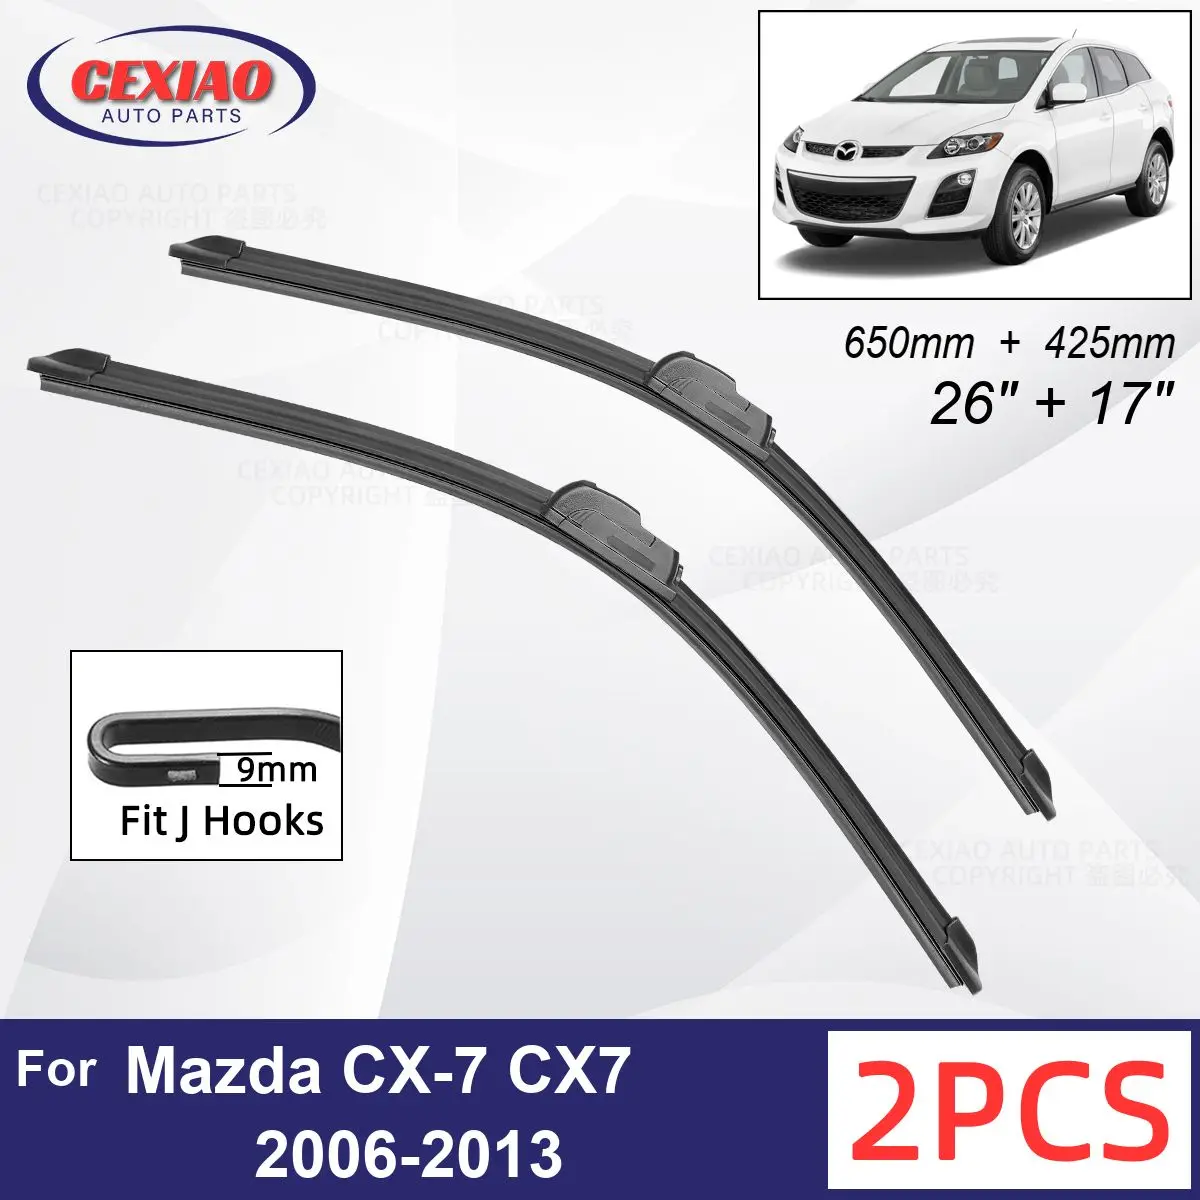 

Car Wiper For Mazda CX-7 CX7 2006-2013 Front Wiper Blades Soft Rubber Windscreen Wipers Auto Windshield 26"+17" 650mm + 425mm